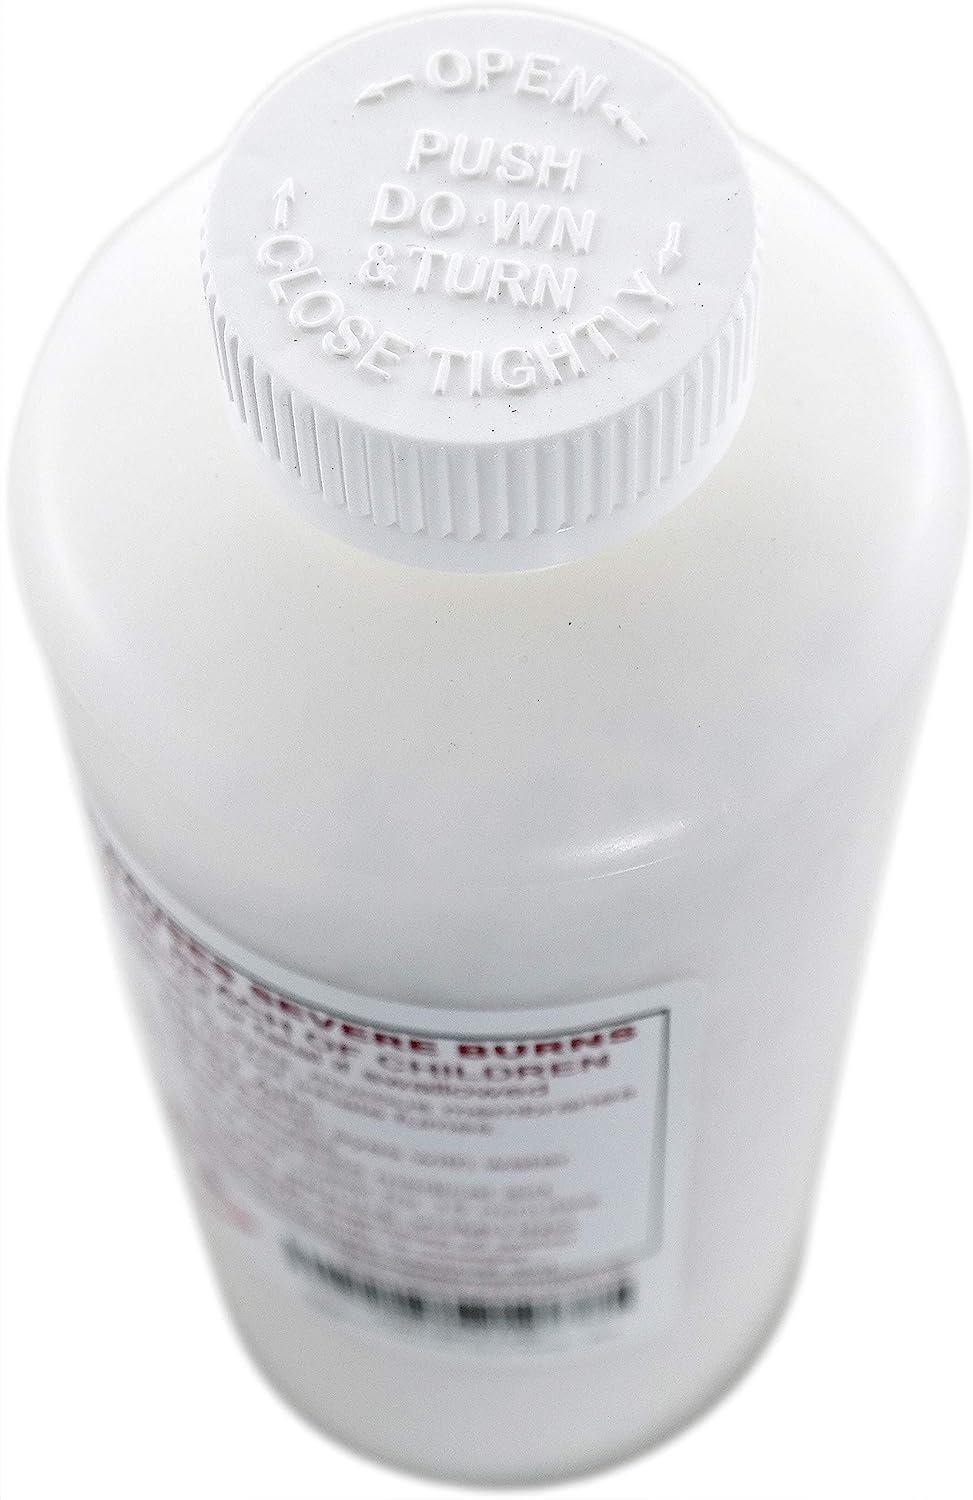 Sodium Hydroxide Lye Micro Beads - Food Grade - USP - 4 lbs - 4 x 1lb  Bottles: Essential Depot